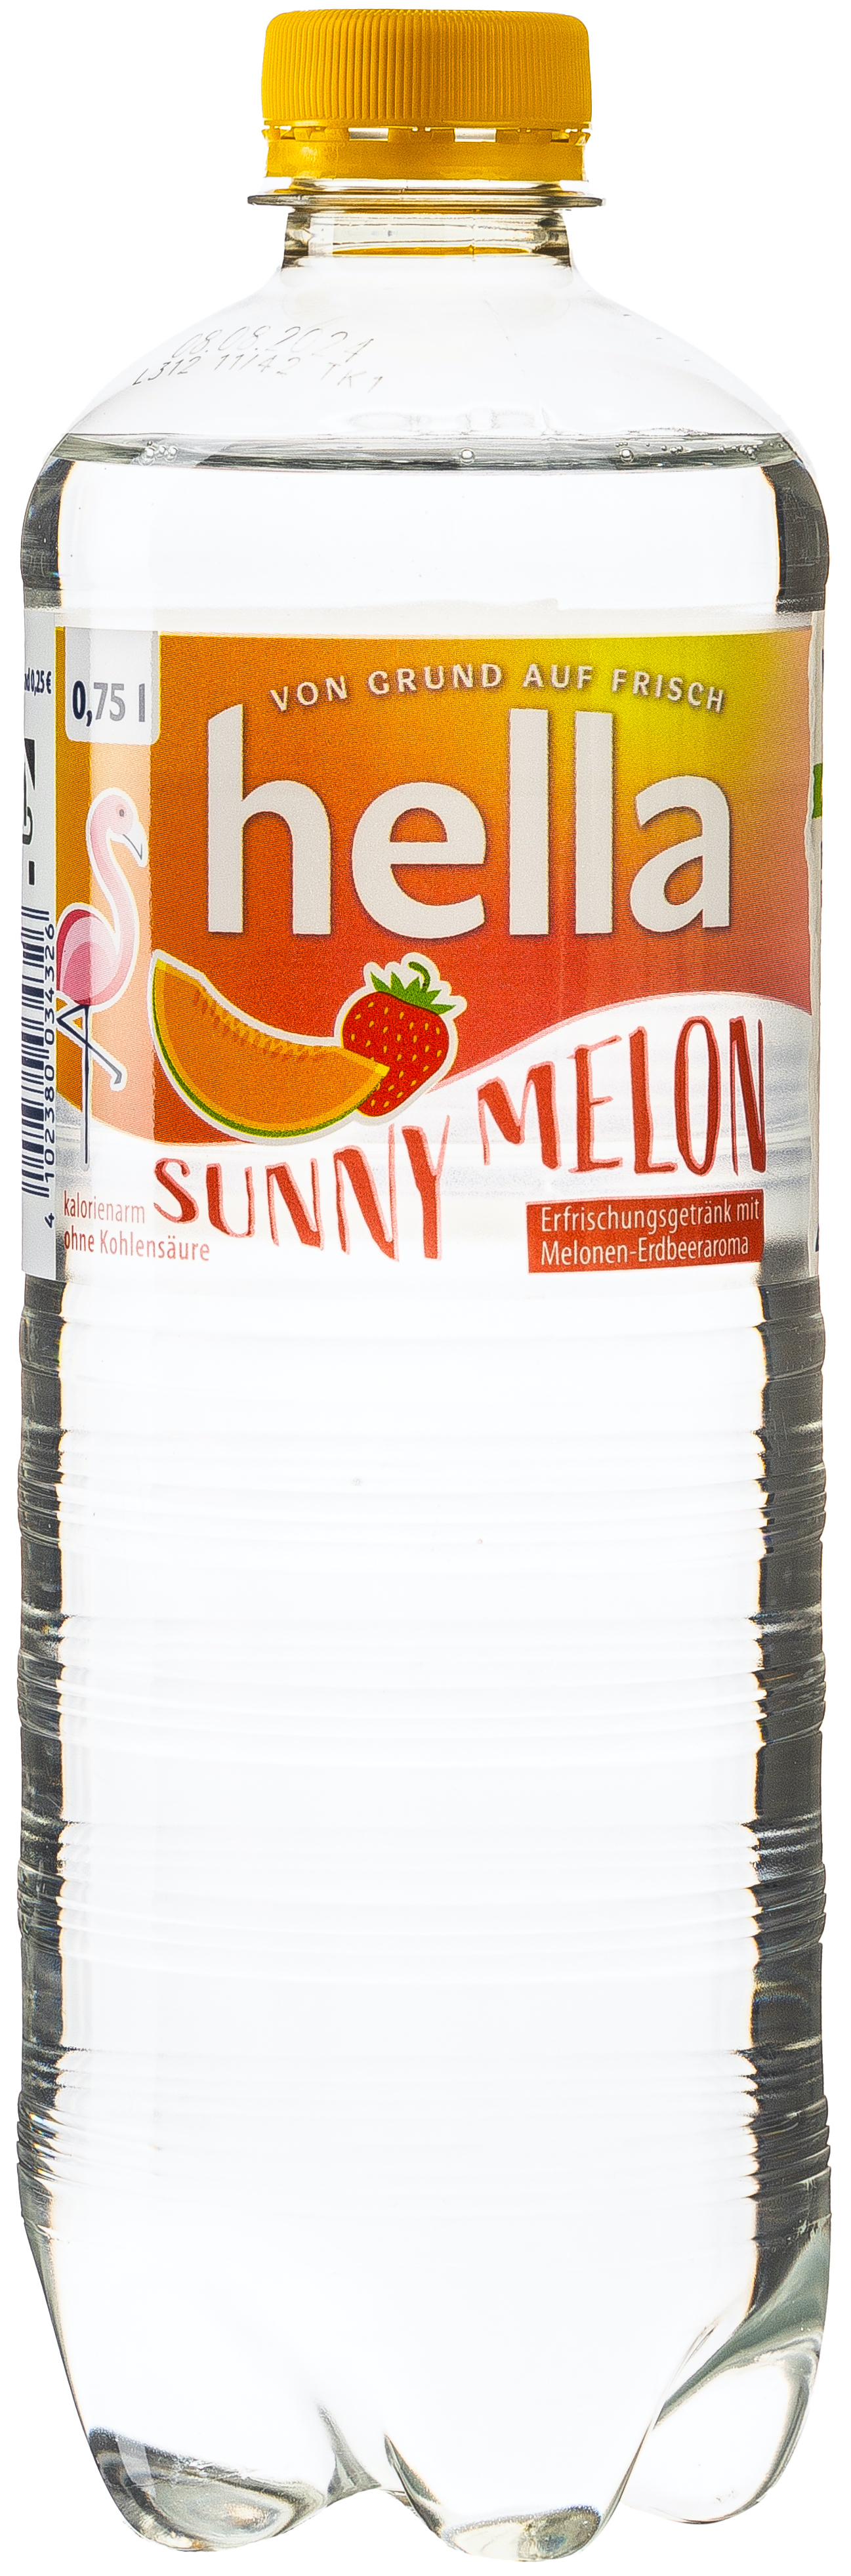 hella Sunny Melon 0,75L EINWEG